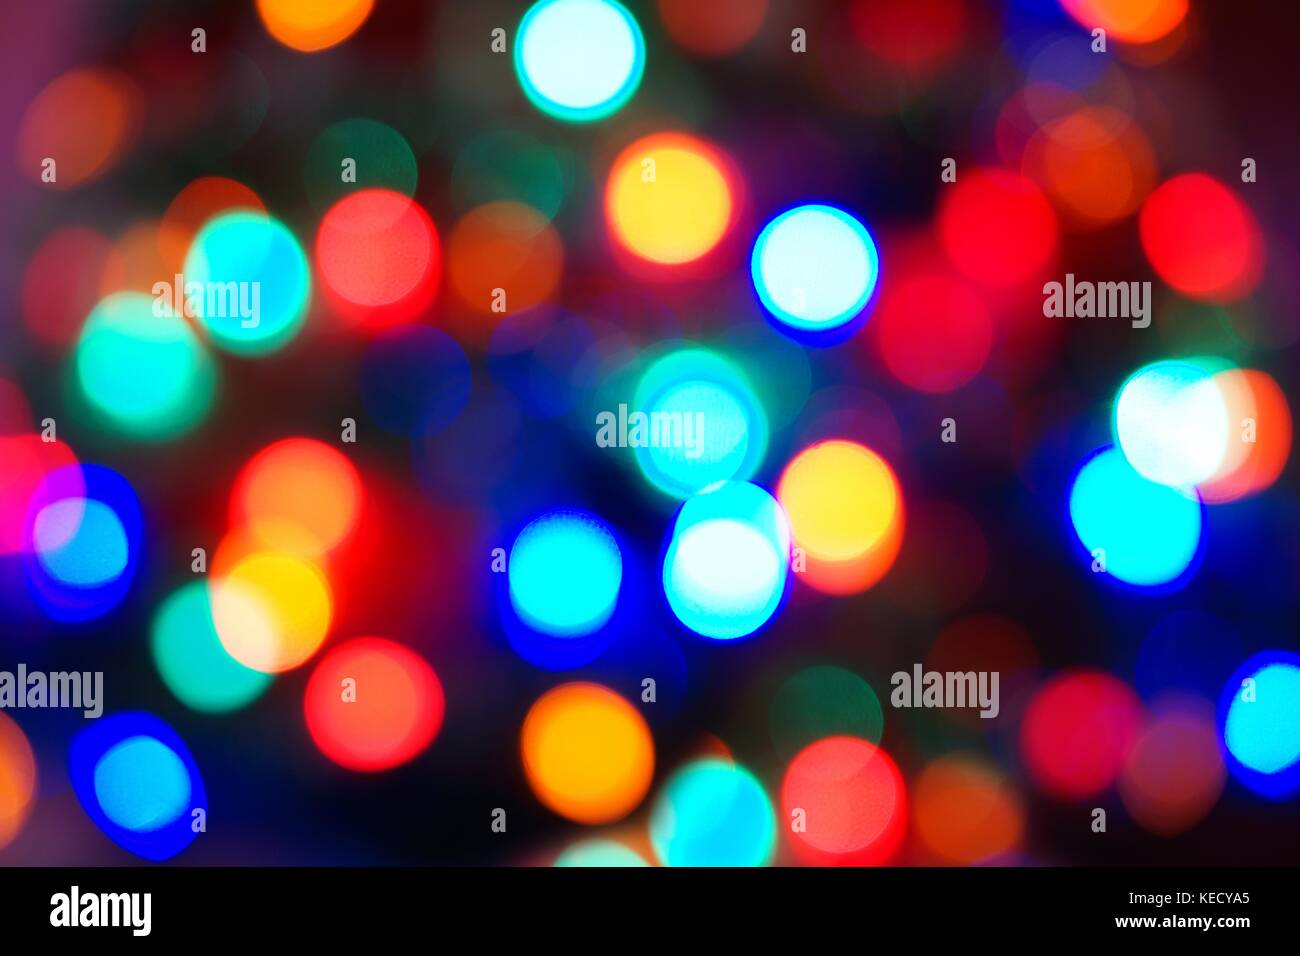 Defocused multi color Christmas light background Stock Photo